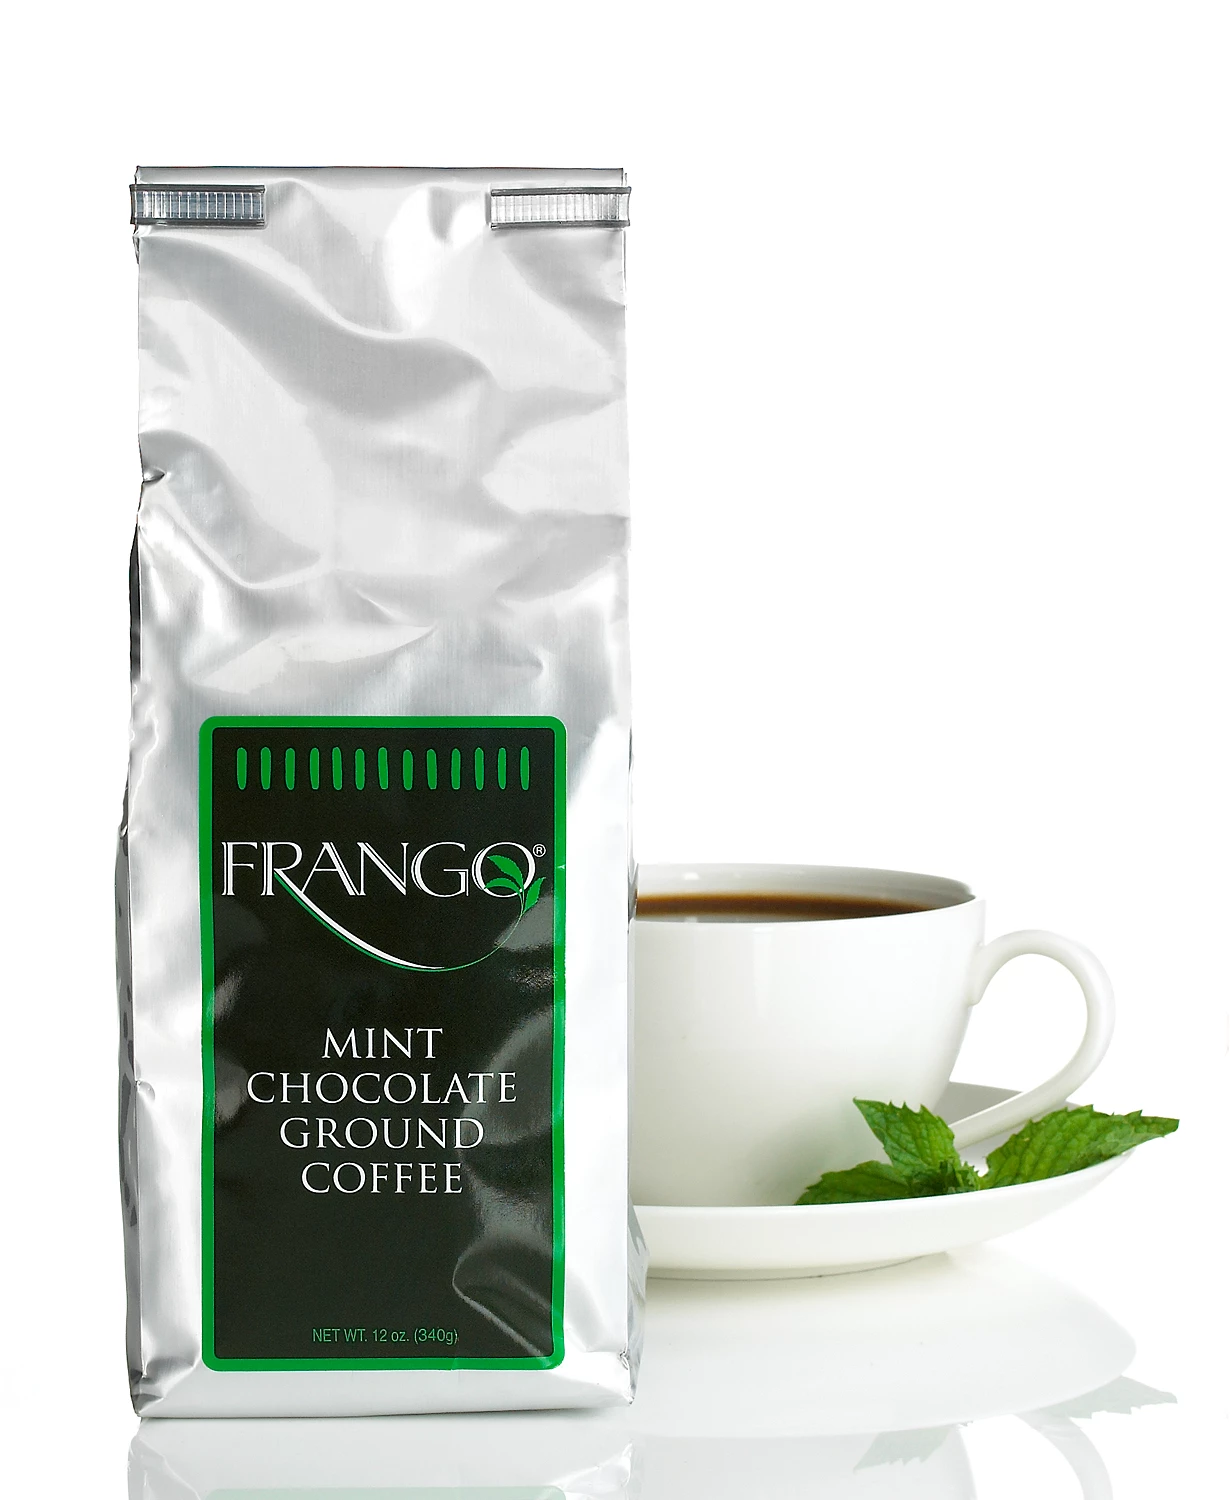 Frango Flavored Coffee, 12 oz. Chocolate Mint Flavored Coffee